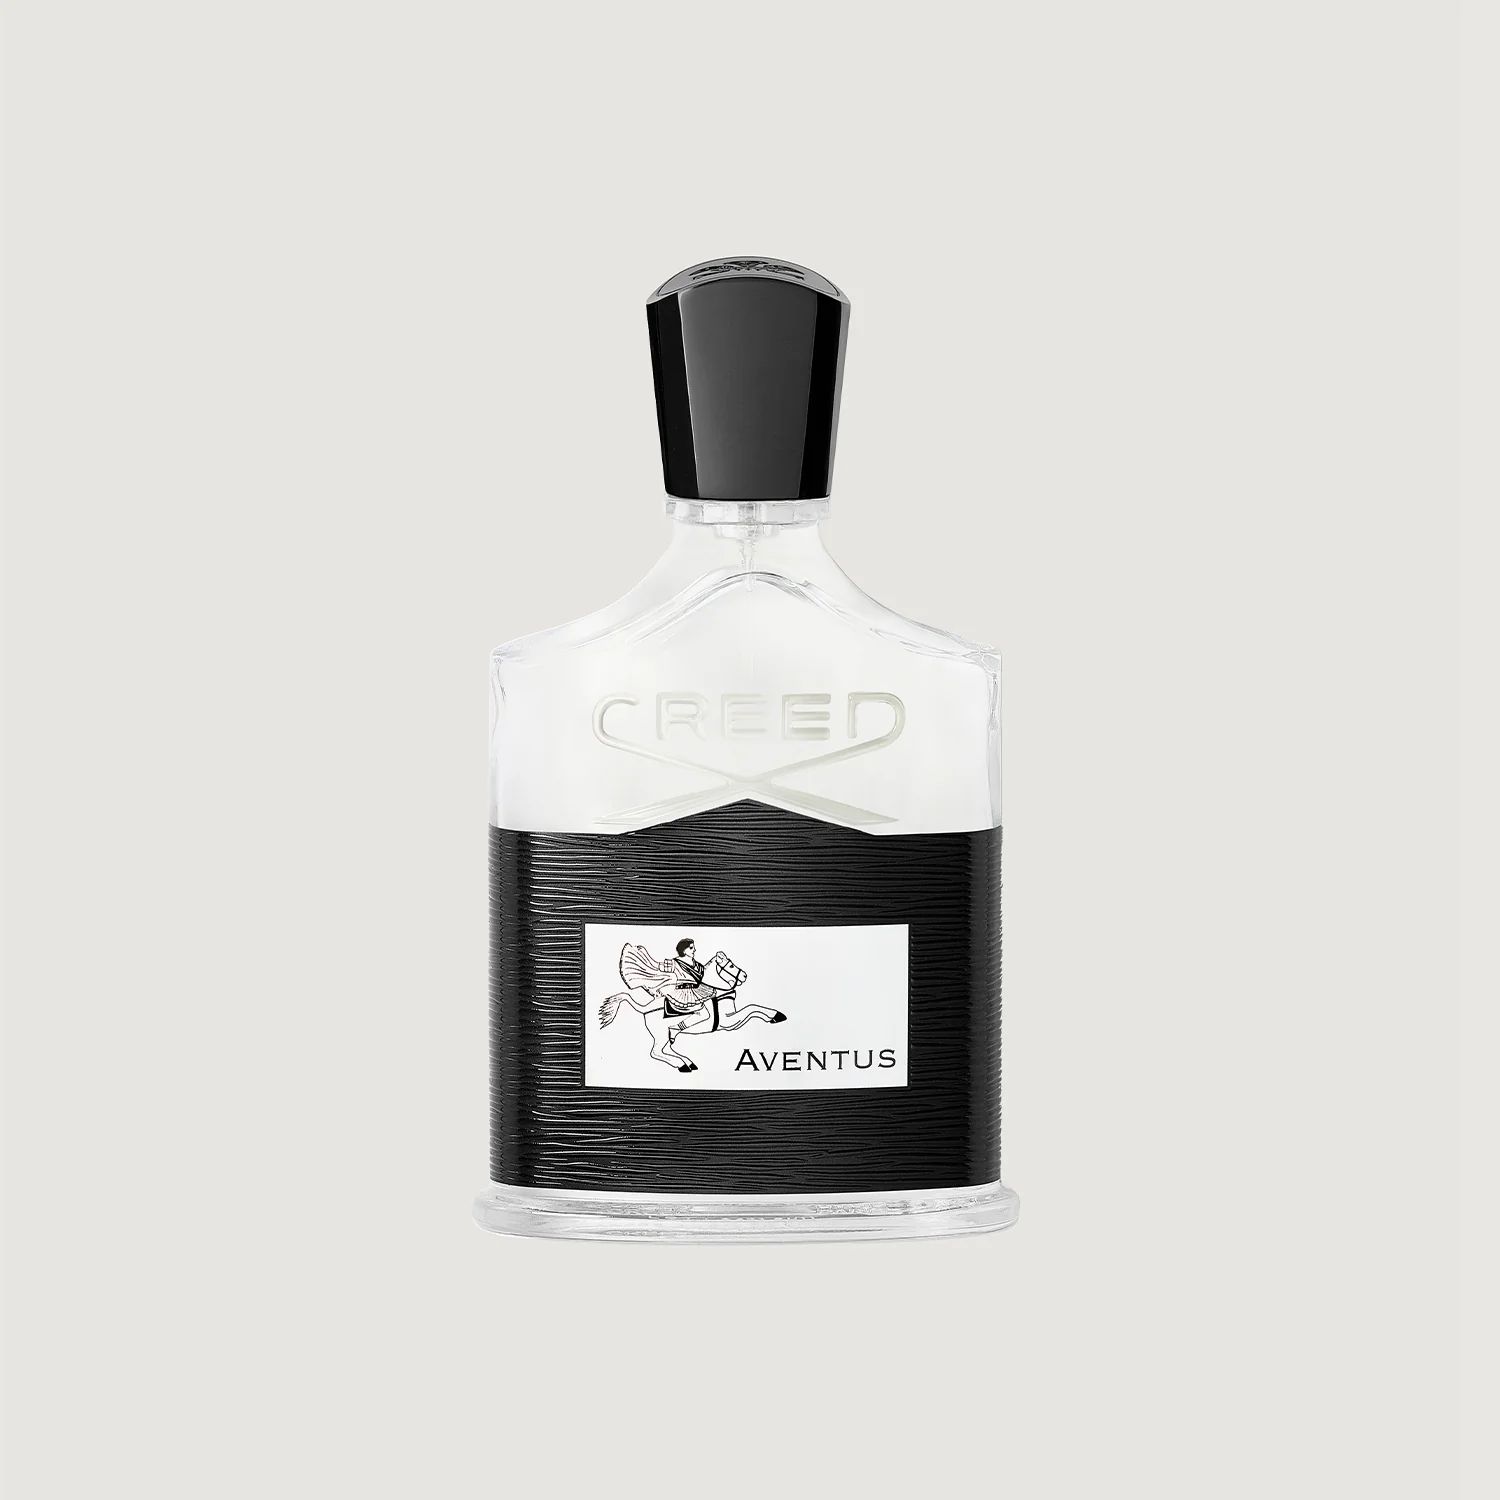 Aventus | Creed Fragrance UK | Creed Fragrances | Creed